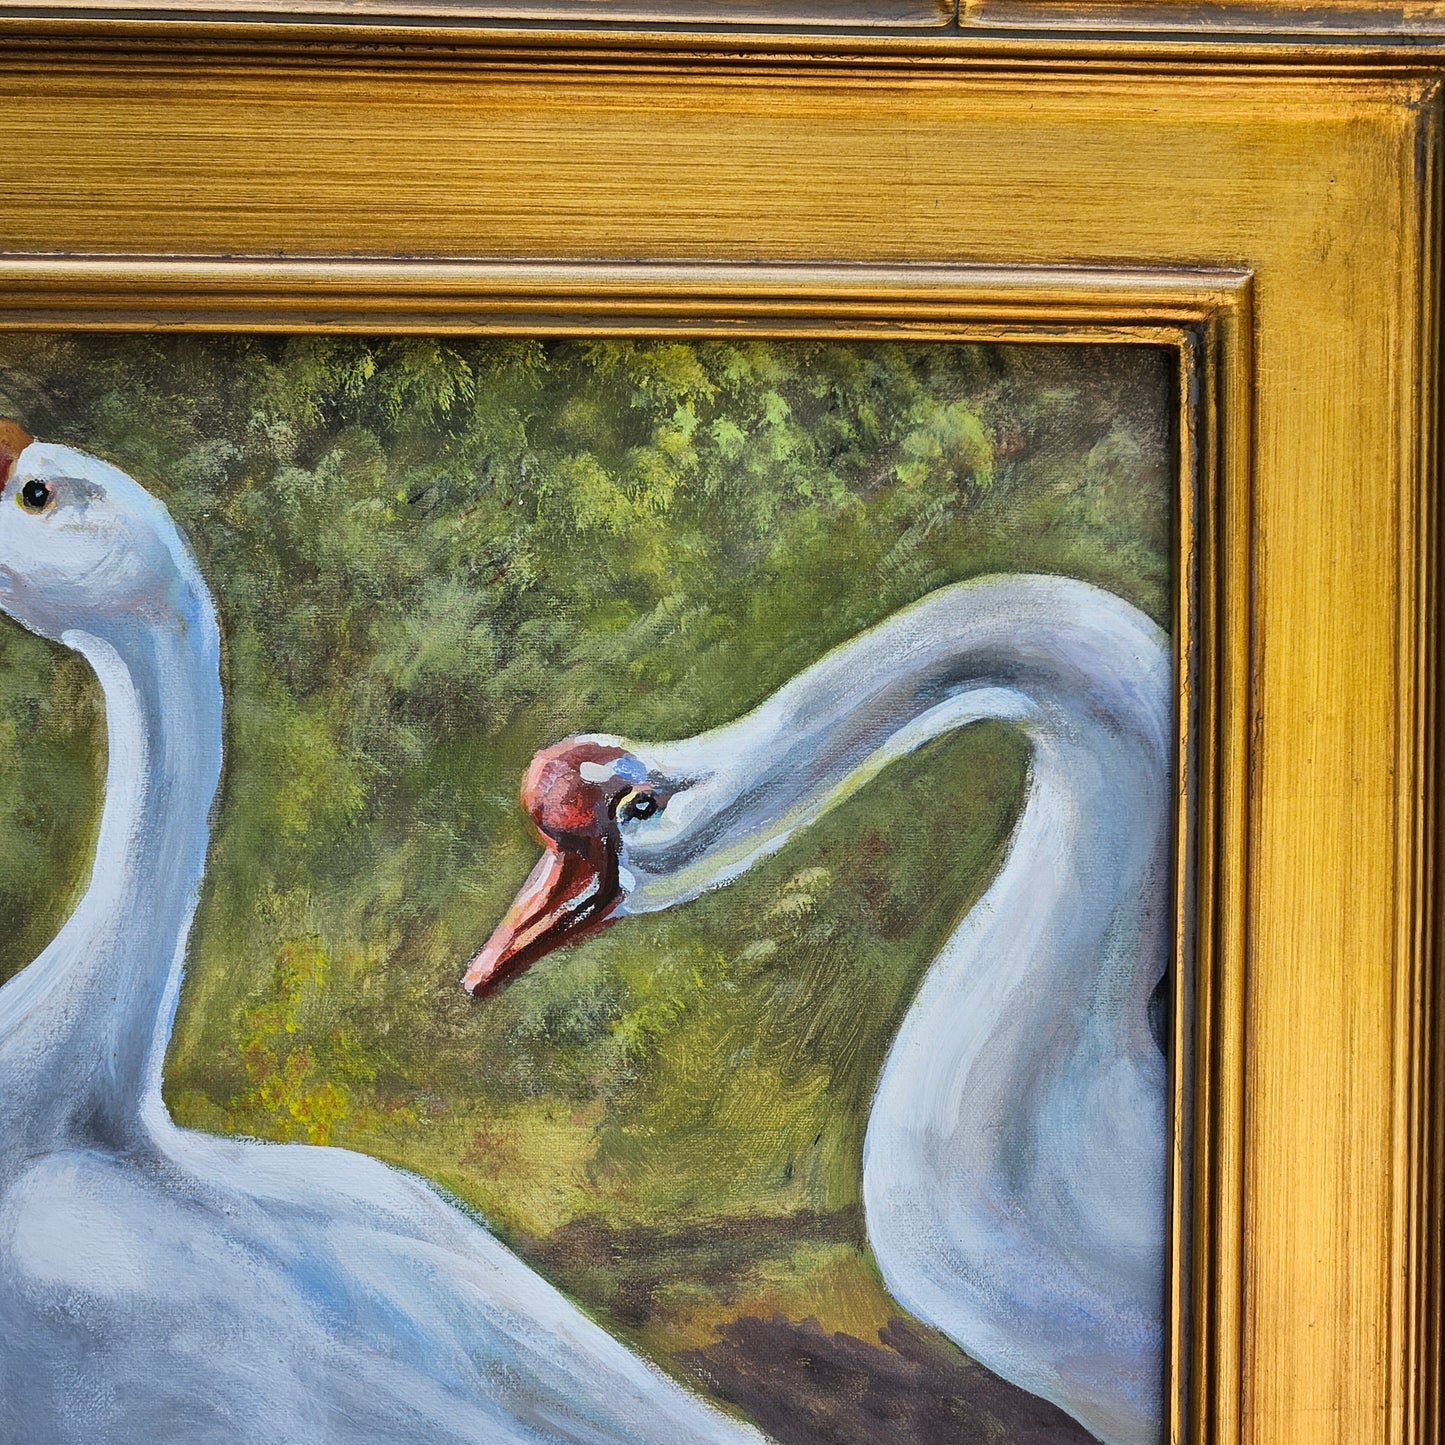 Simon Michael "Three Geese" Original Painting on Canvas